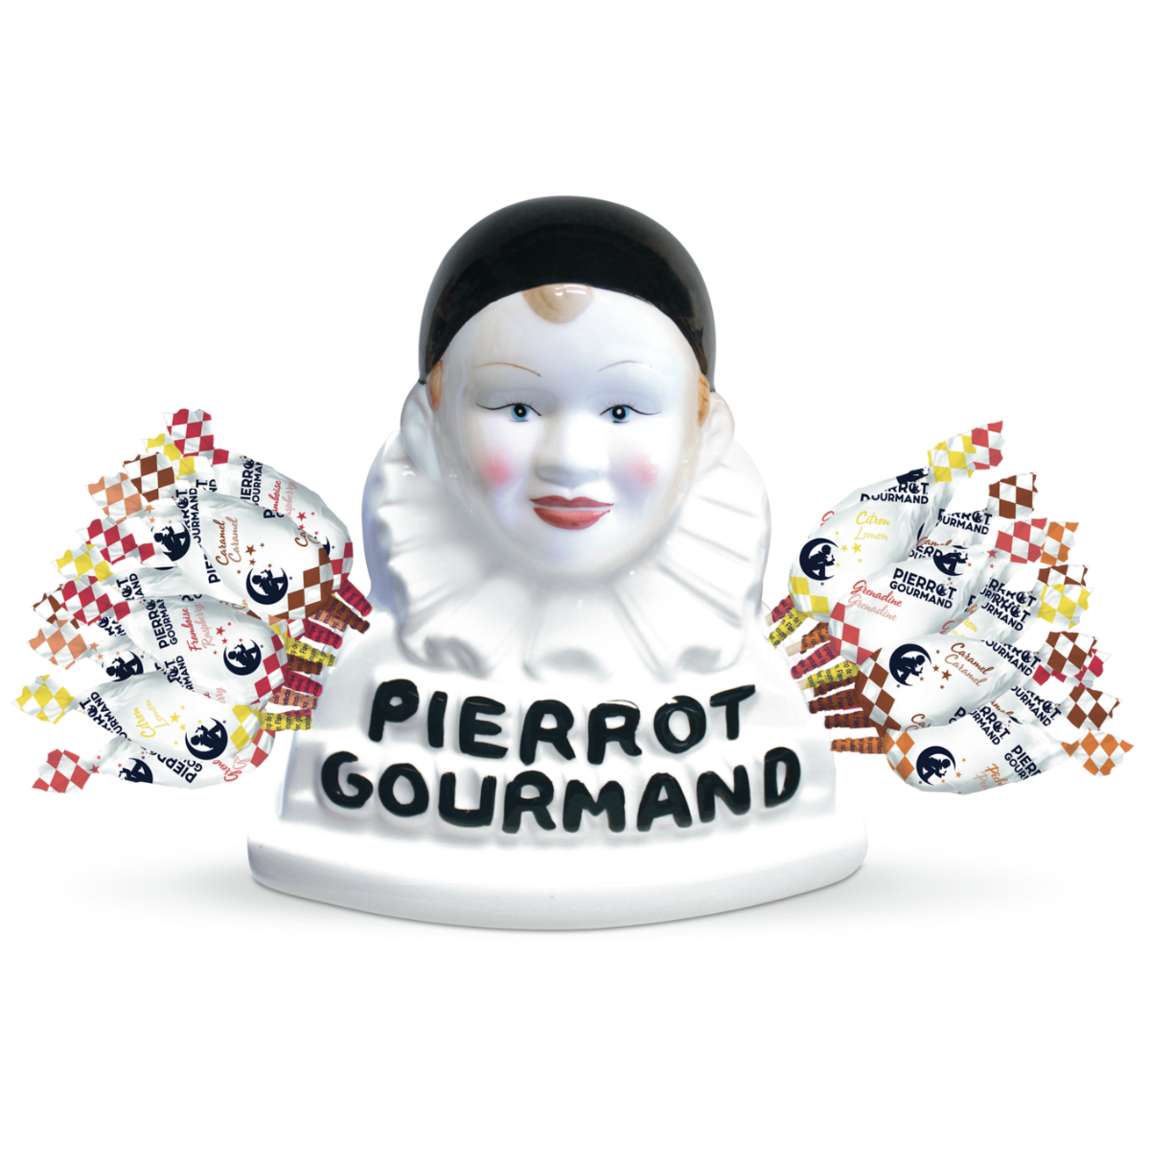 Pierrot Gourmand France